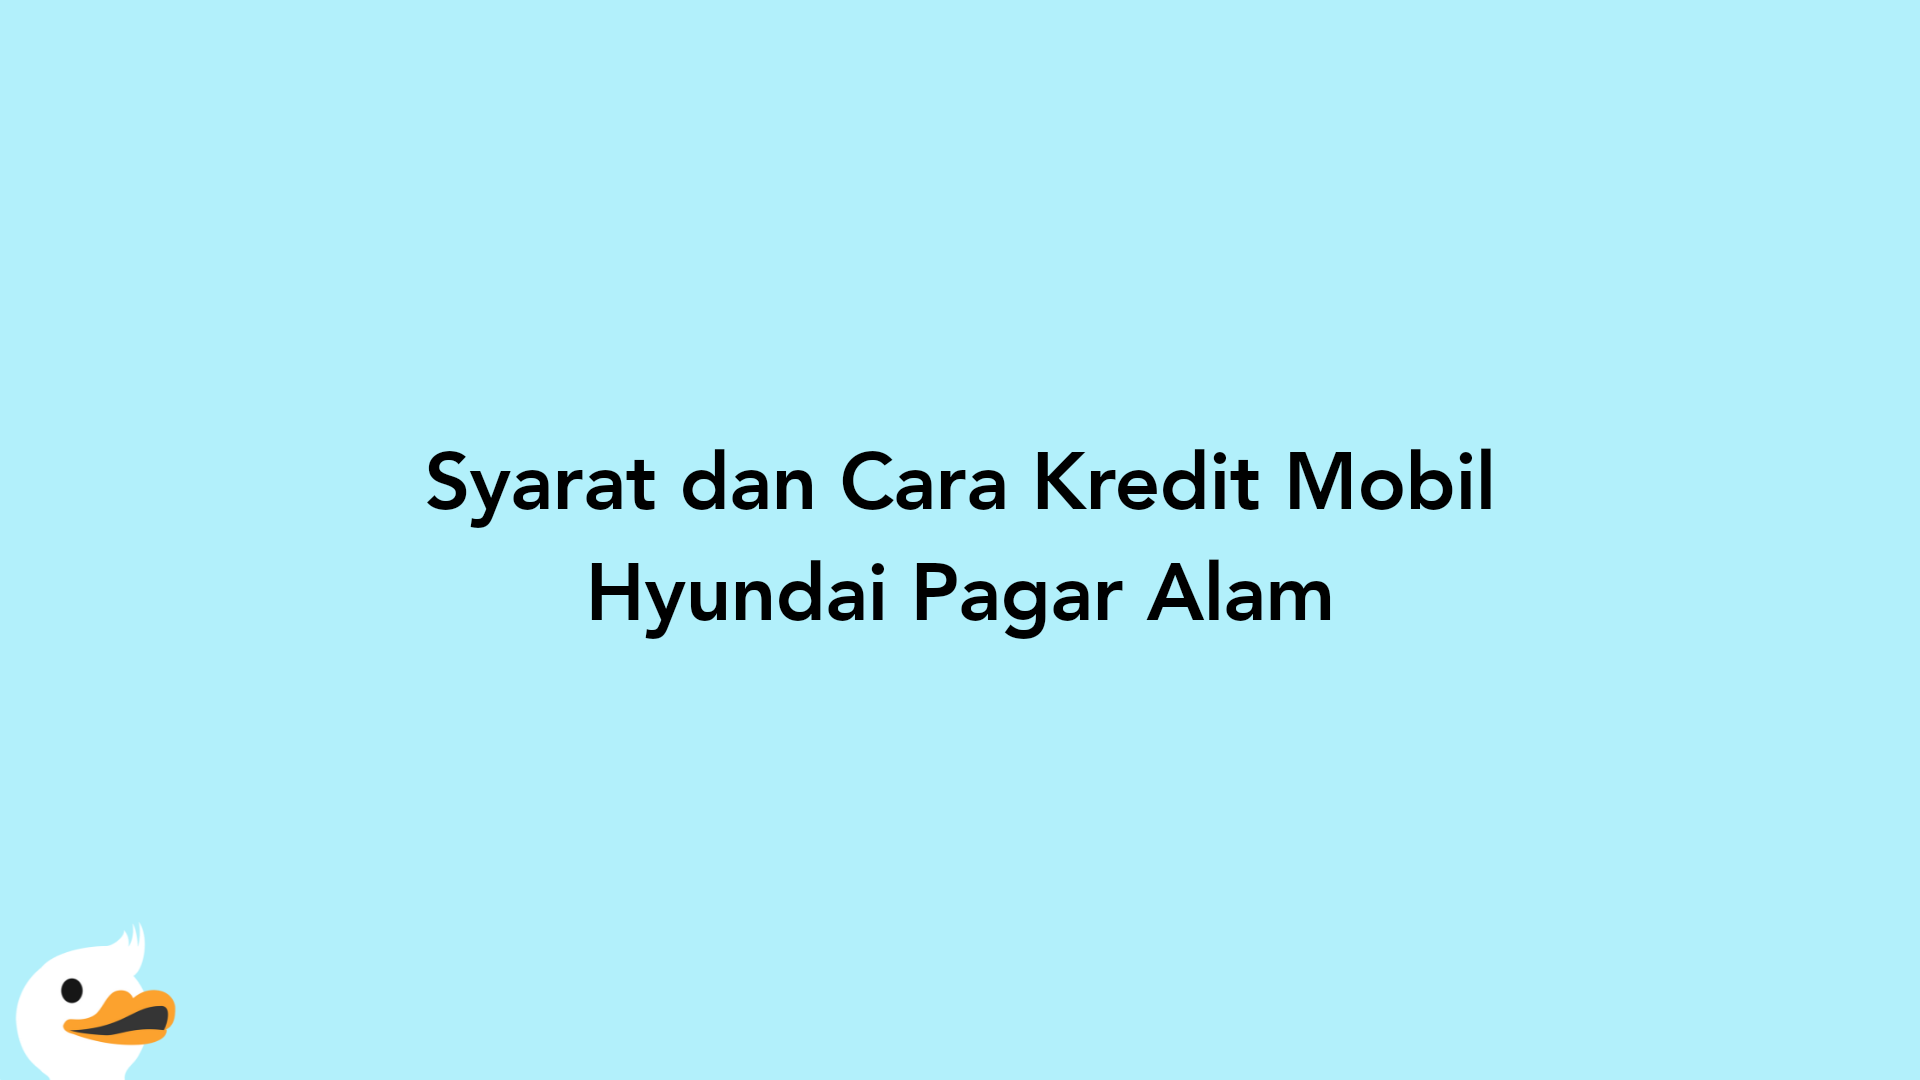 Syarat dan Cara Kredit Mobil Hyundai Pagar Alam